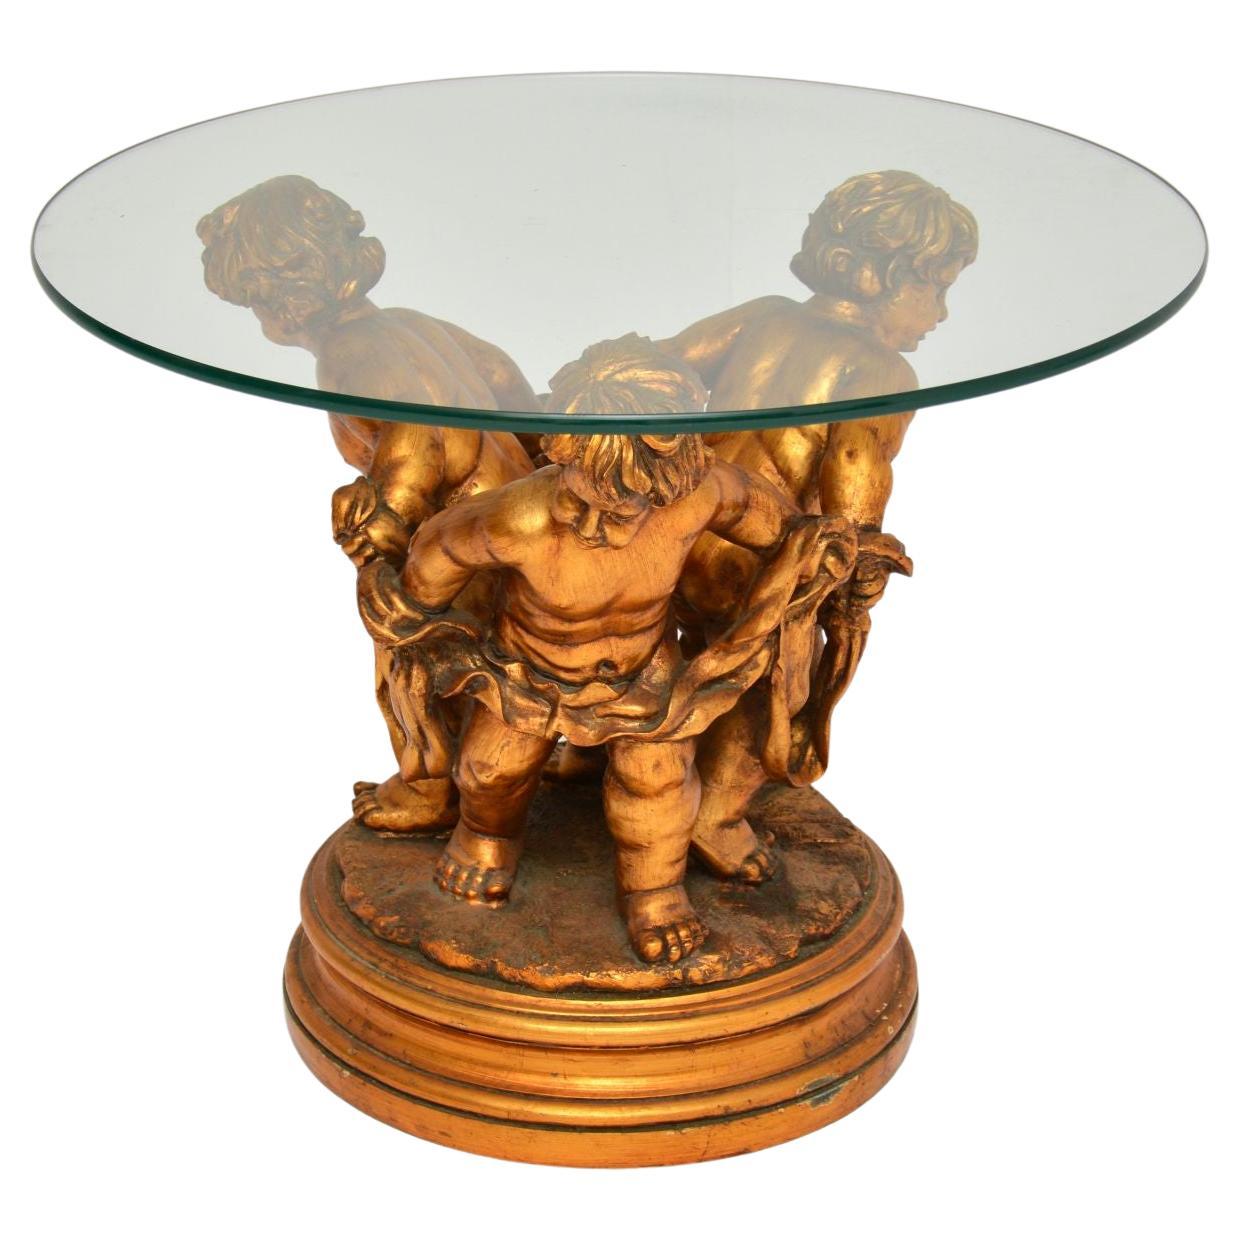 Antique French Style Gilt Wood Cherub Coffee Table